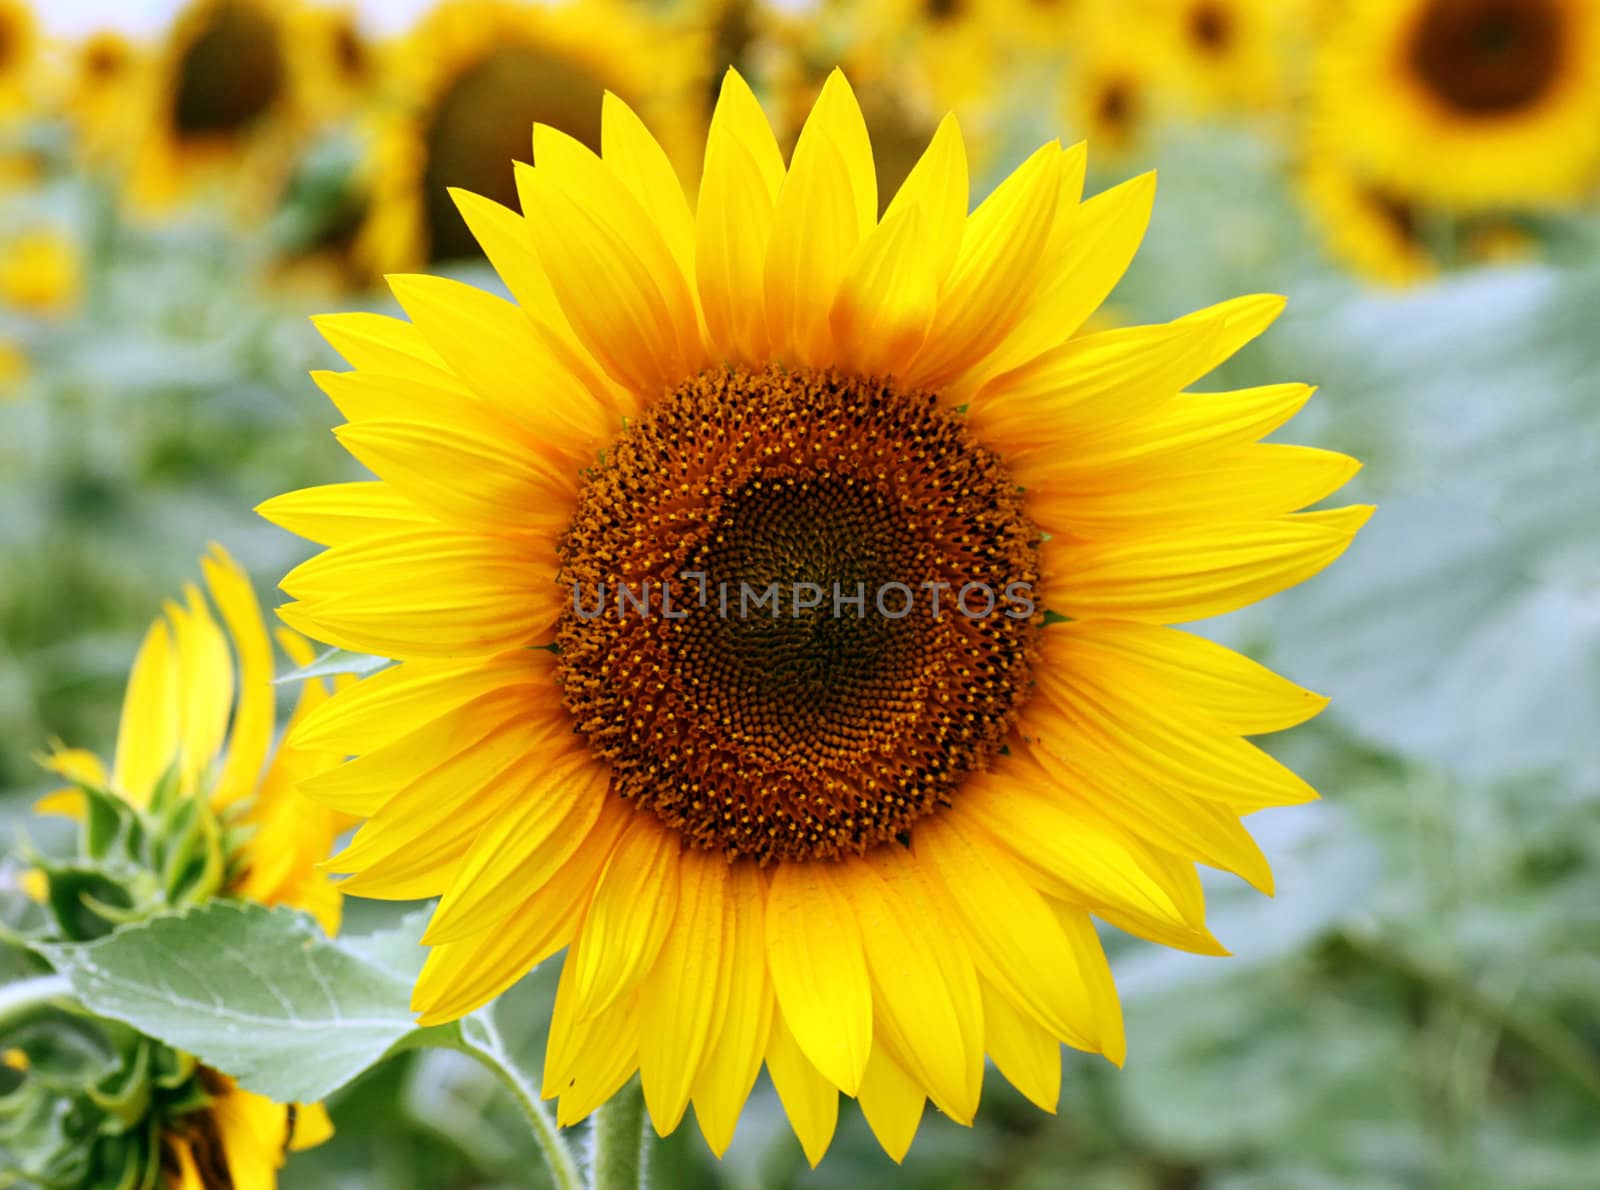 close up of sunflower head